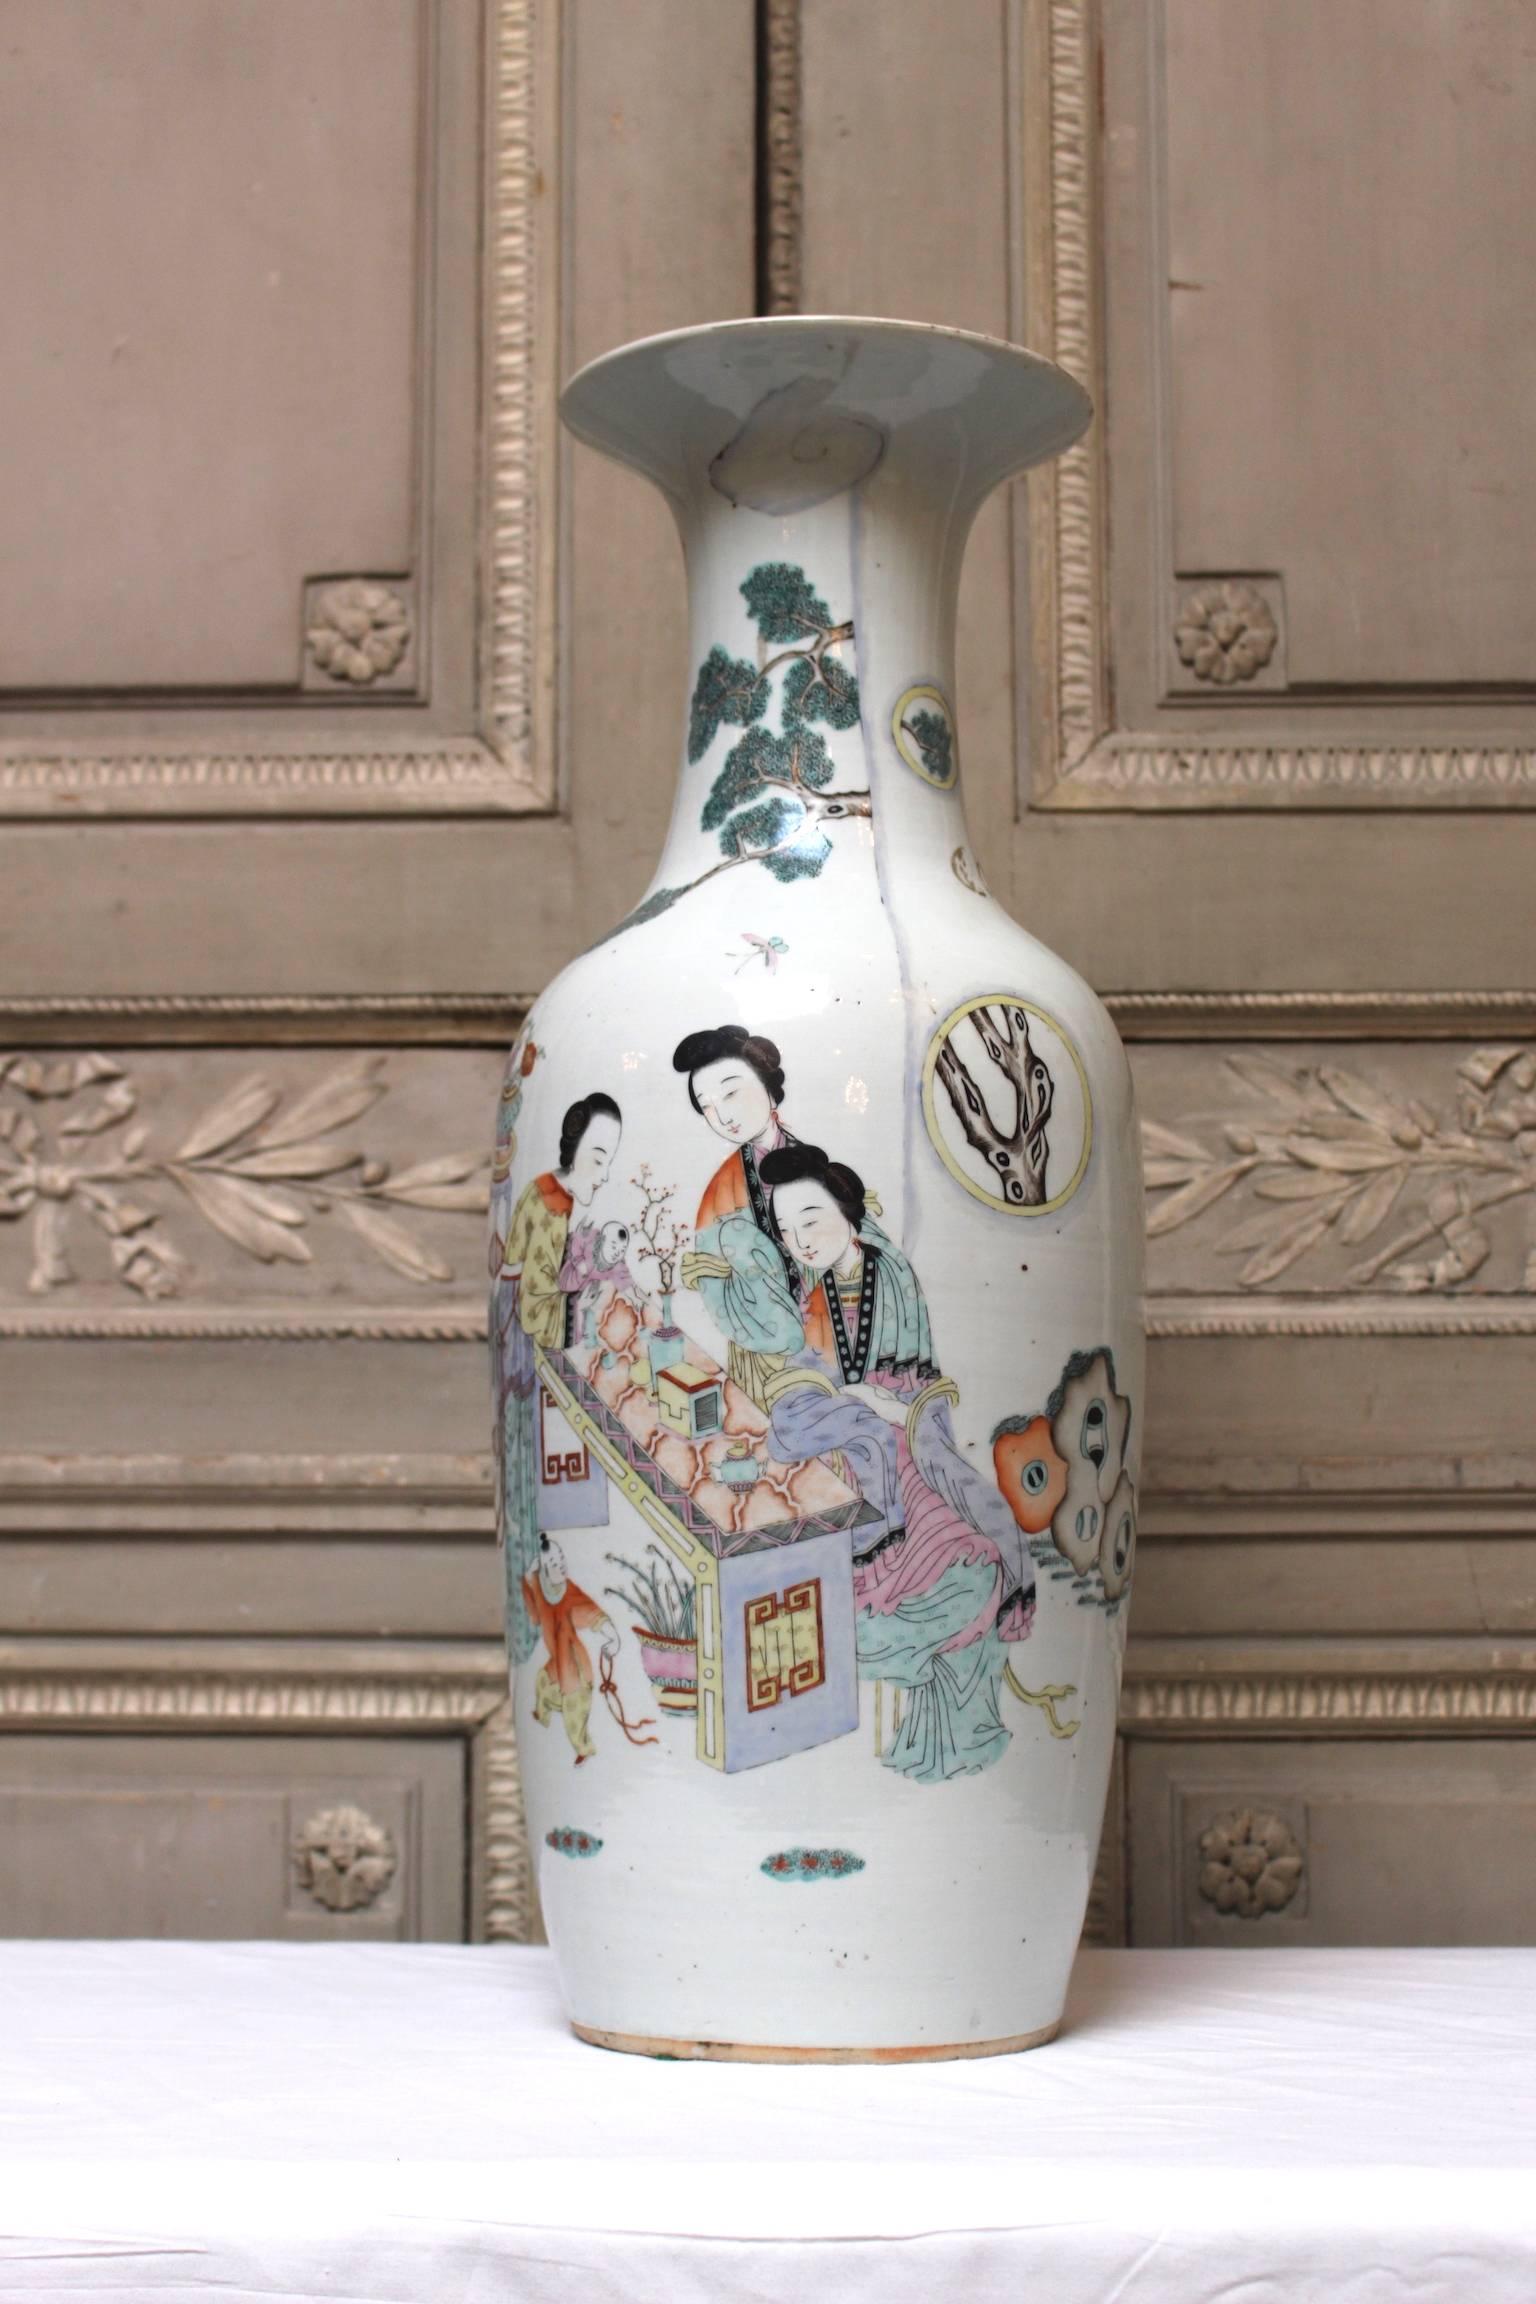 A large Chinese porcelain vase.